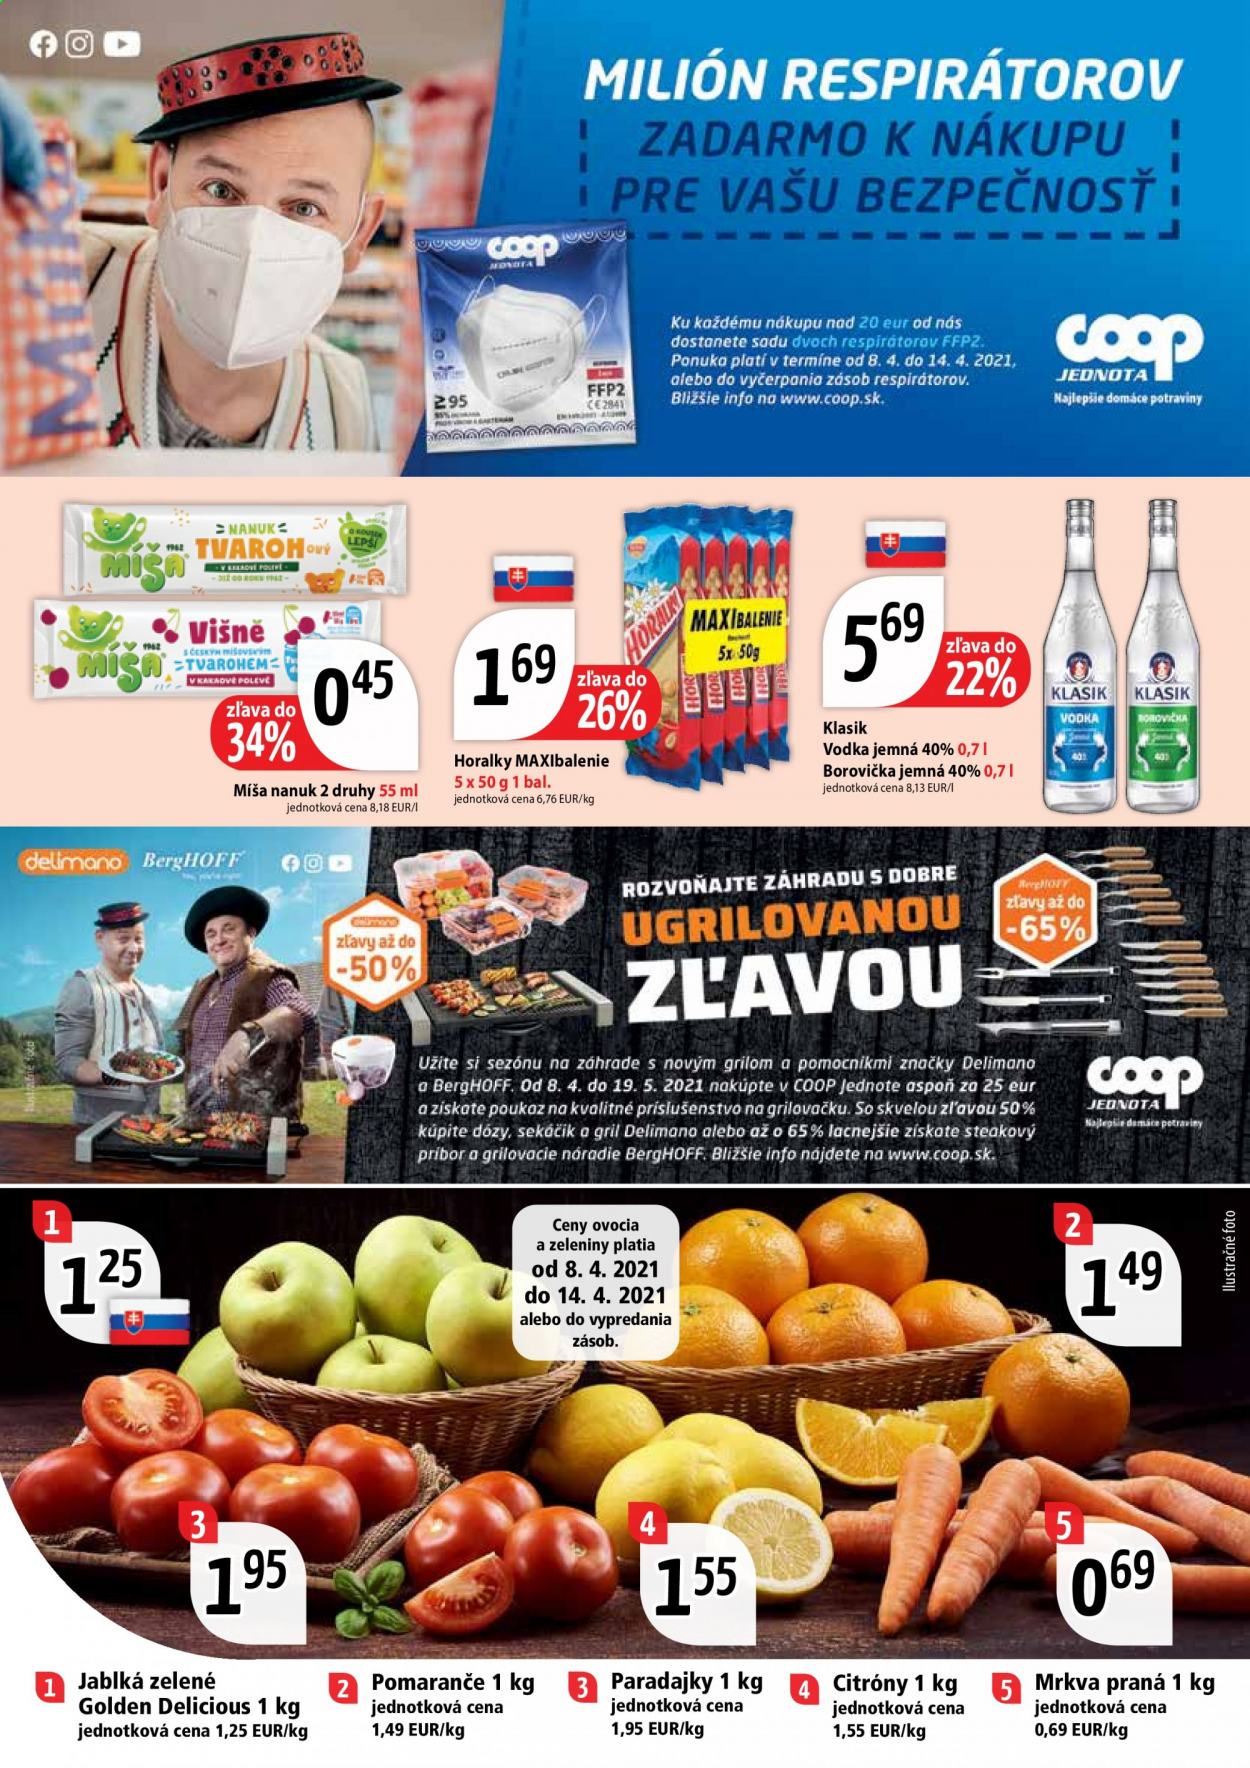 thumbnail - Leták COOP Jednota - 8.4.2021 - 21.4.2021 - Produkty v akcii - alkohol, borovička, vodka, misa, Horalky, pomaranče, paradajky, mrkva, citróny, Golden Delicious, jablká. Strana 12.